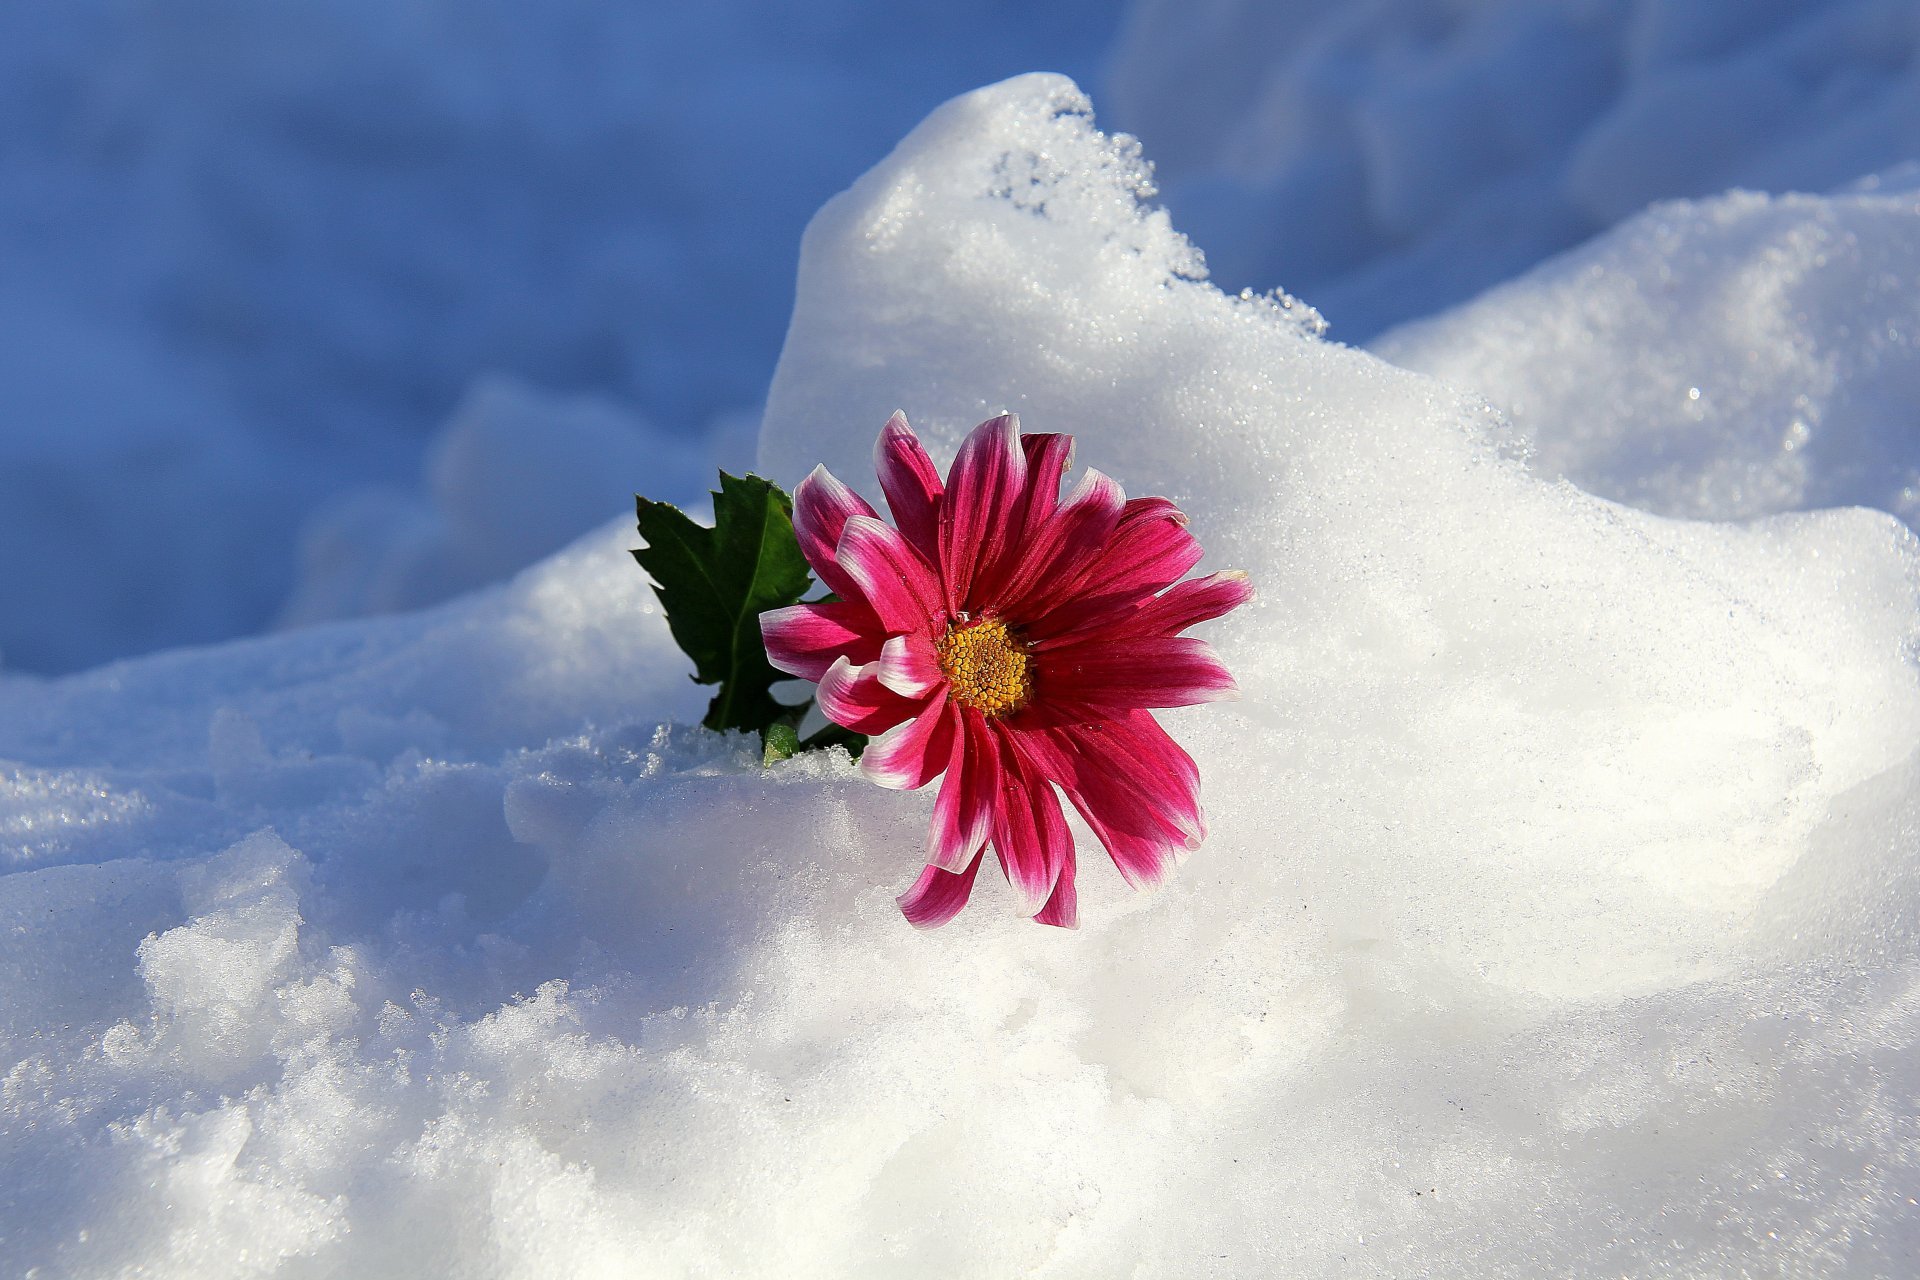 Snow Flower Gallery